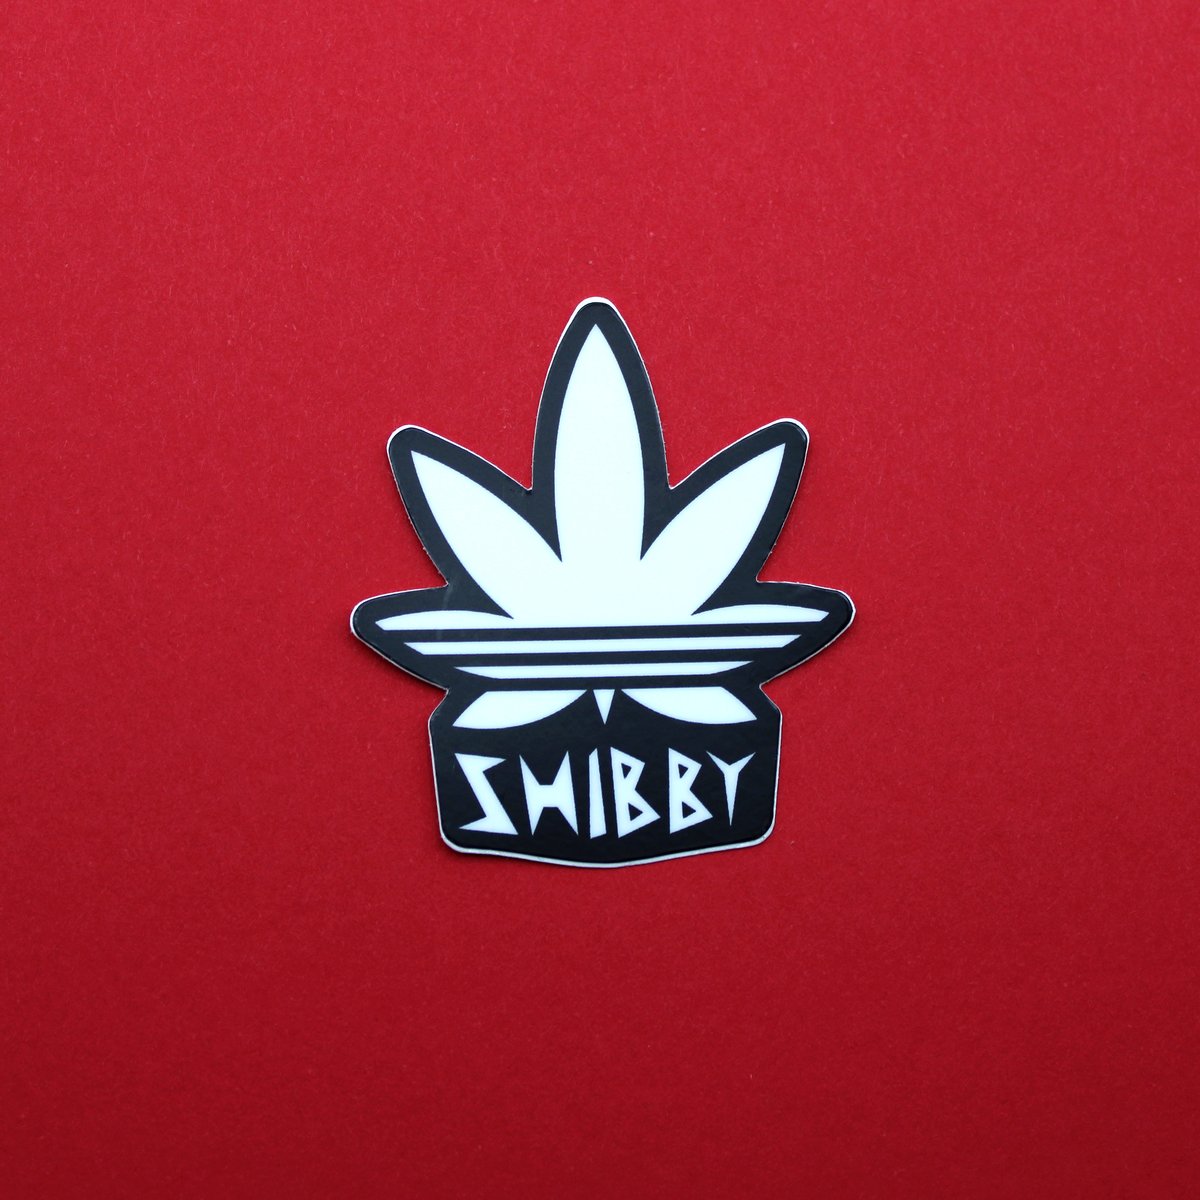 Shibby Stickers